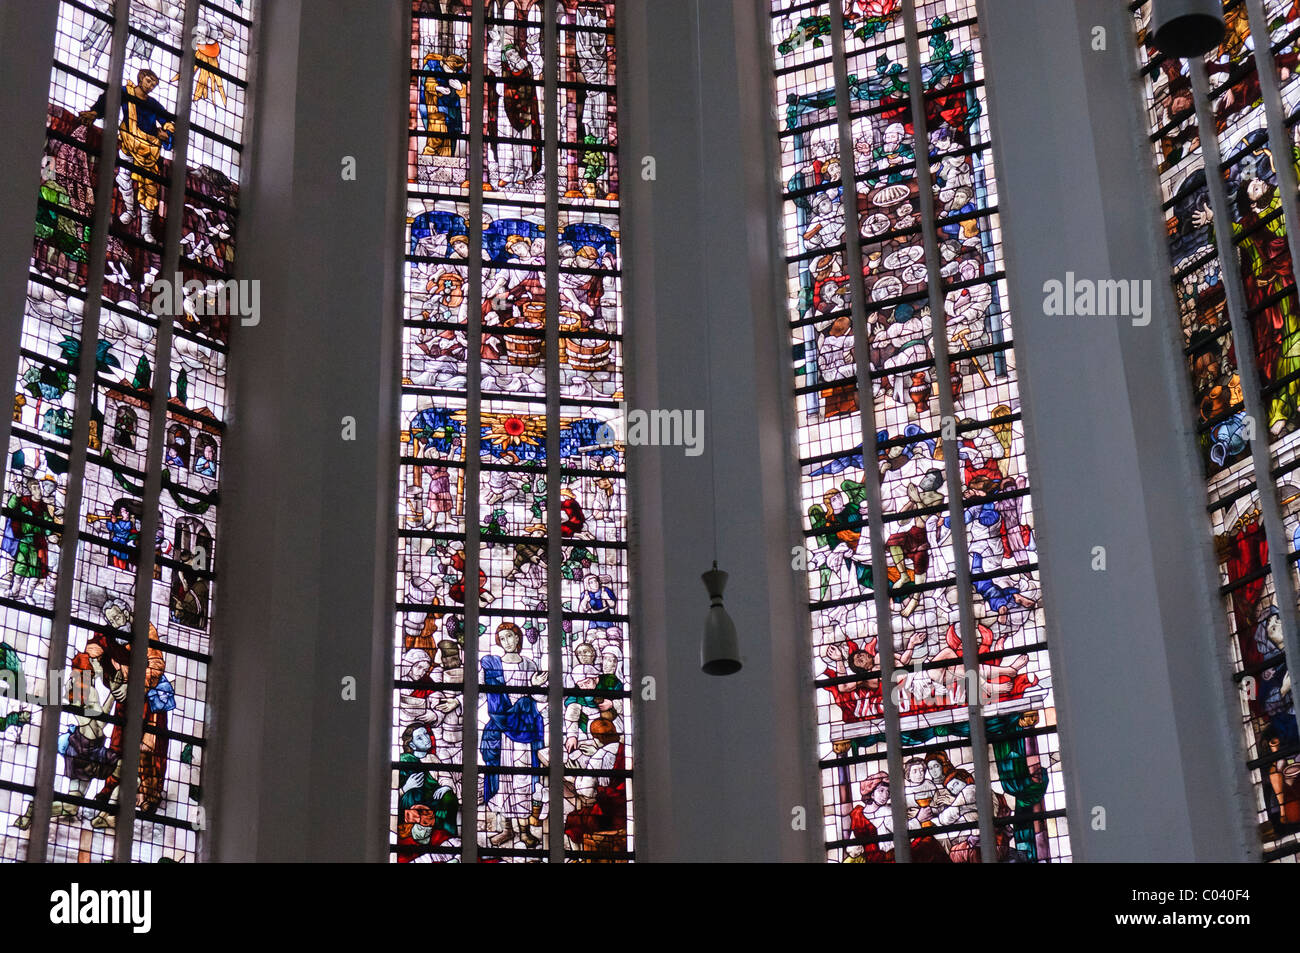 https://c8.alamy.com/comp/C040F4/stained-glass-windows-inside-the-oudkerk-delft-C040F4.jpg